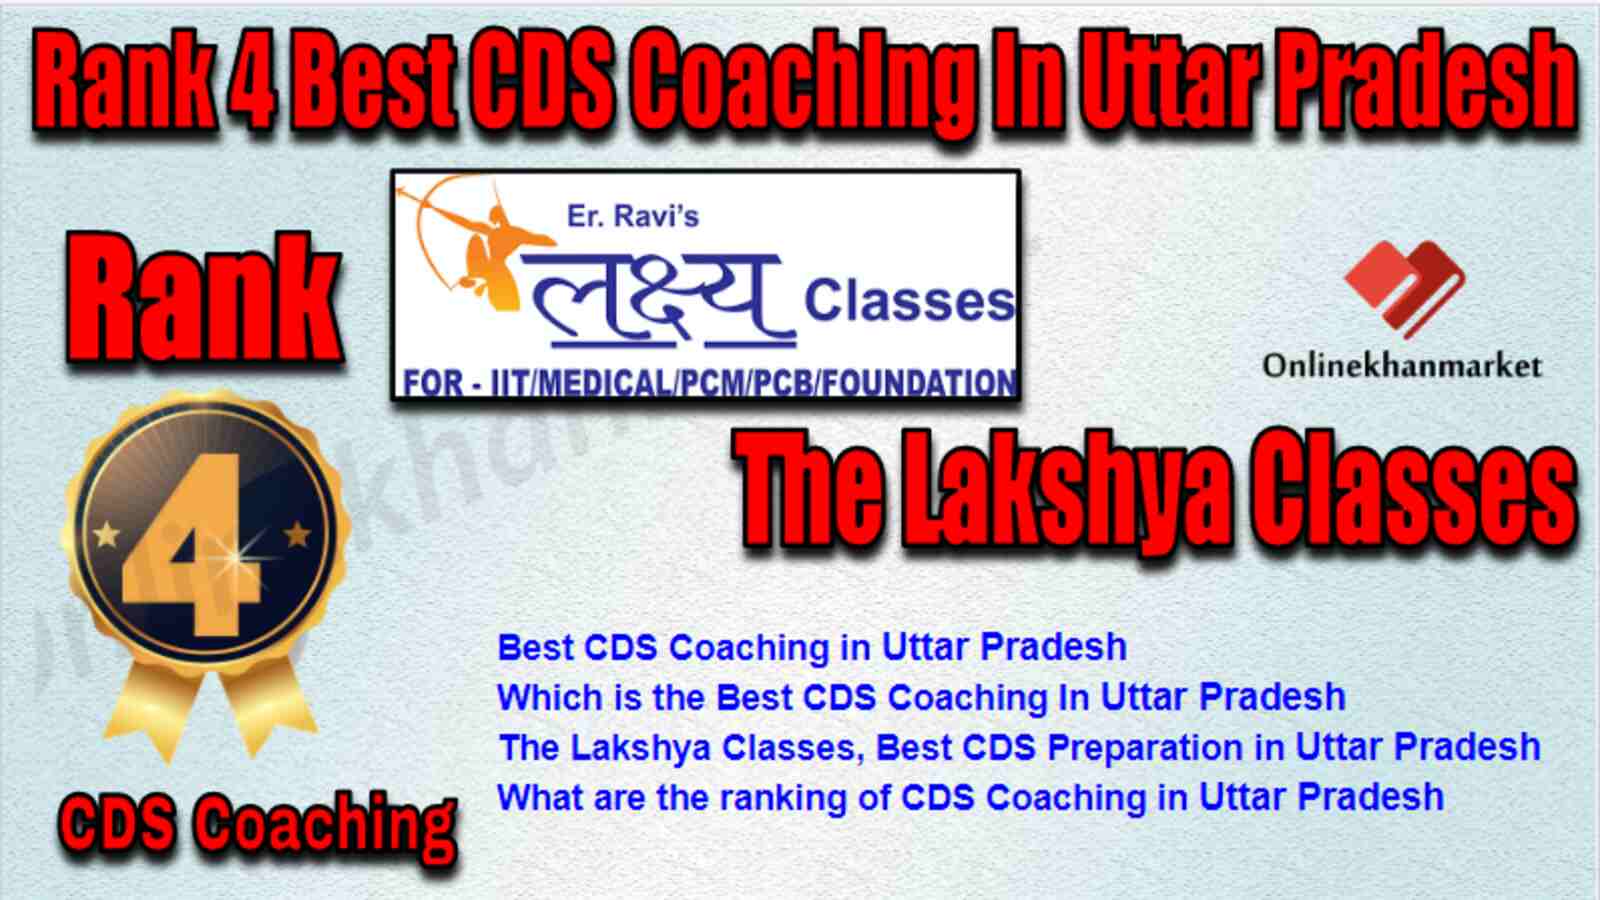 Rank 4 Best CDS Coaching in Uttar Pradesh